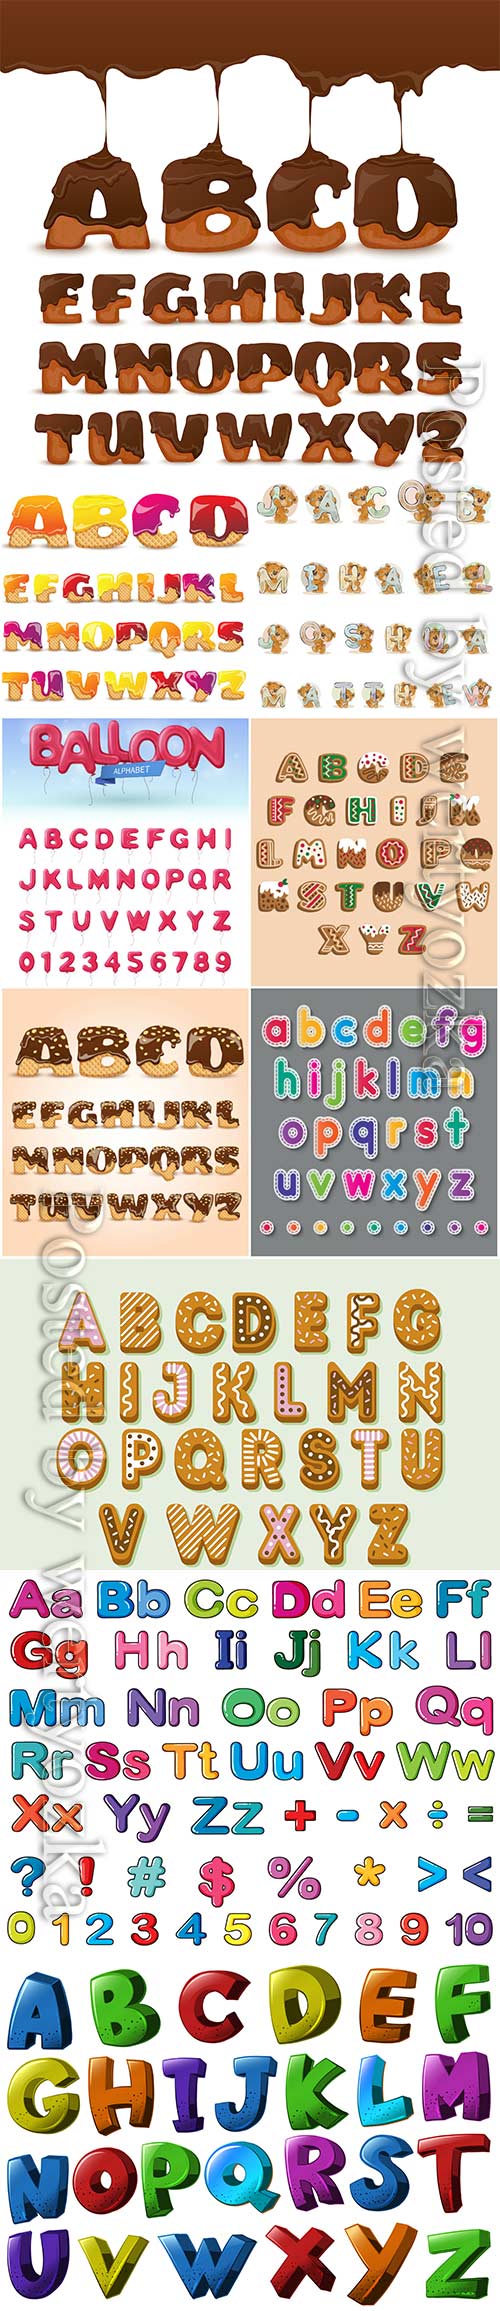 English alphabet fonts vector illustration